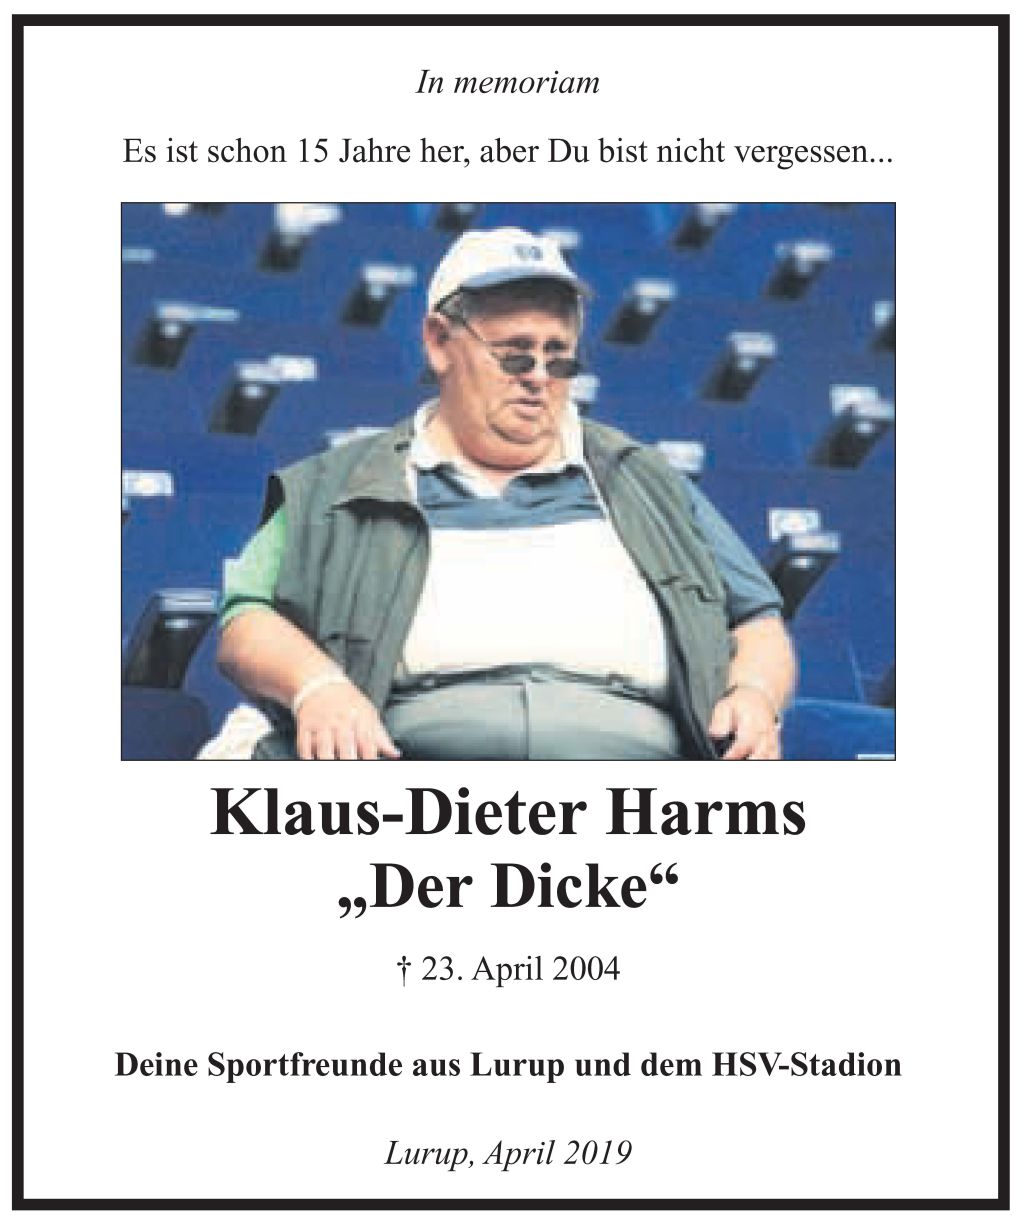 "Der Dicke" Klaus-Dieter Harms, verstorben 23.April 2004